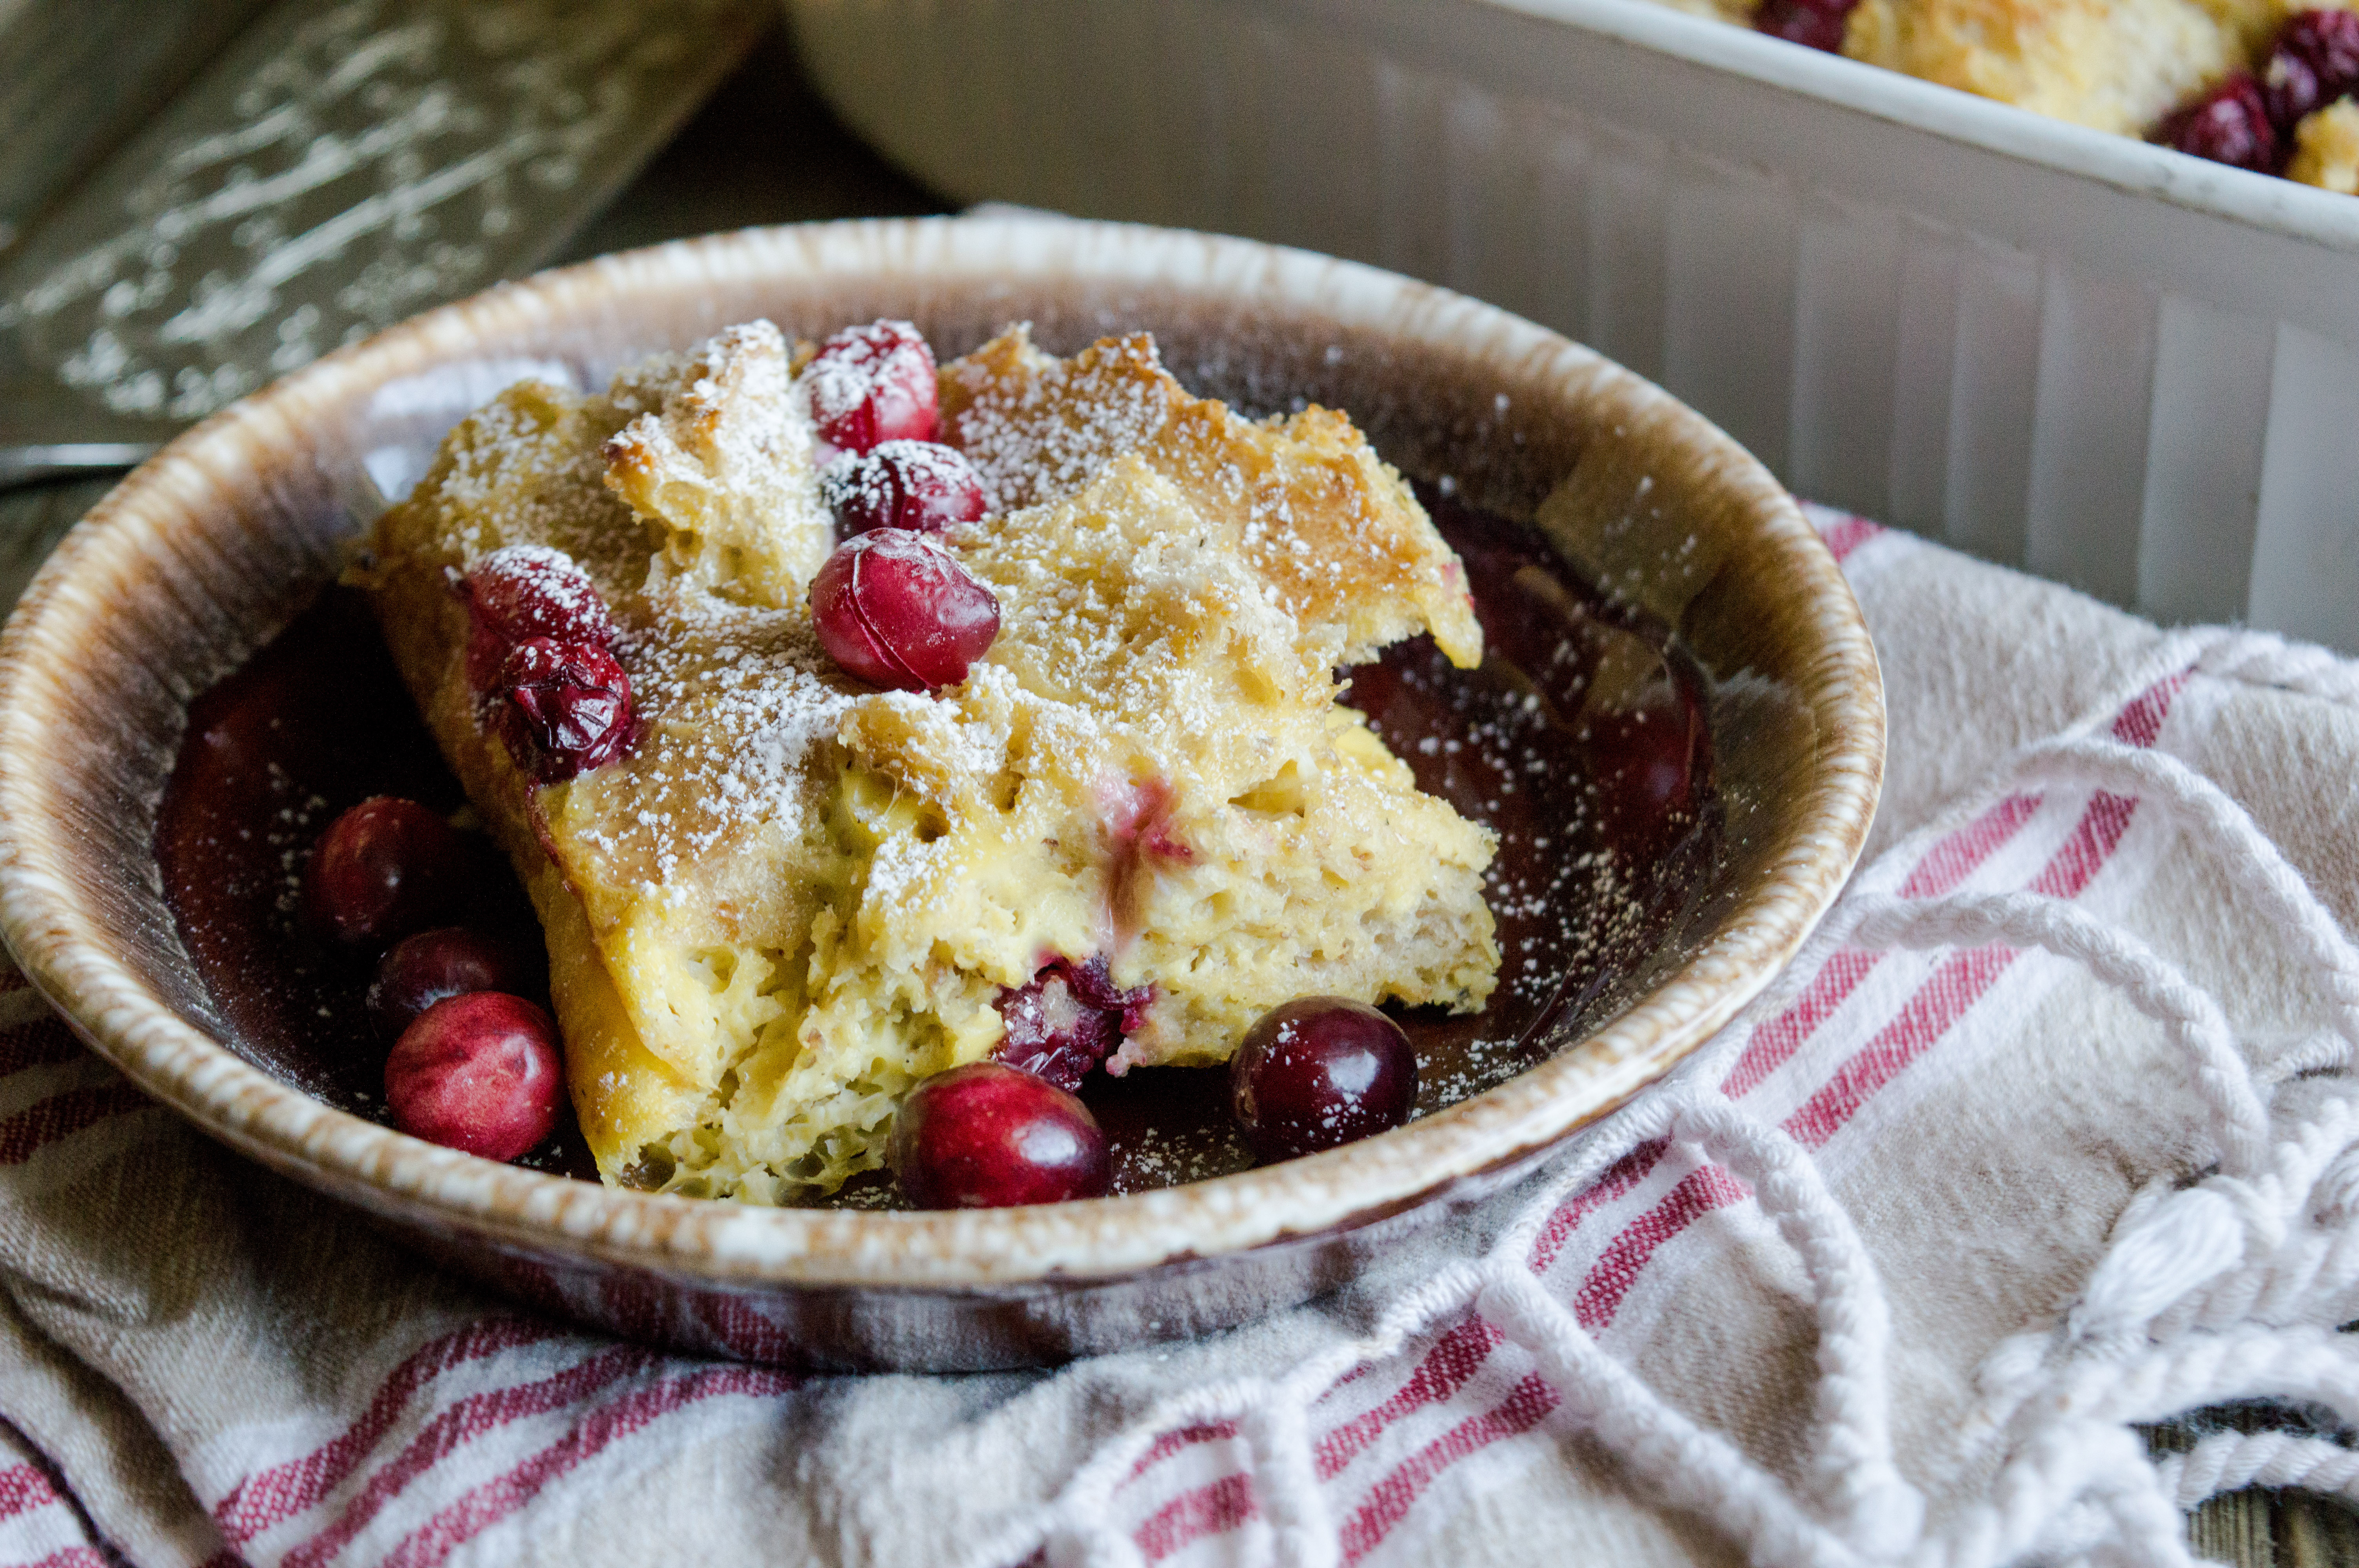 Cranberry Eggnog Bake, Christmas Breakfast, Holiday Recipes, Christmas Recipes, Cranberry Holiday Recipes